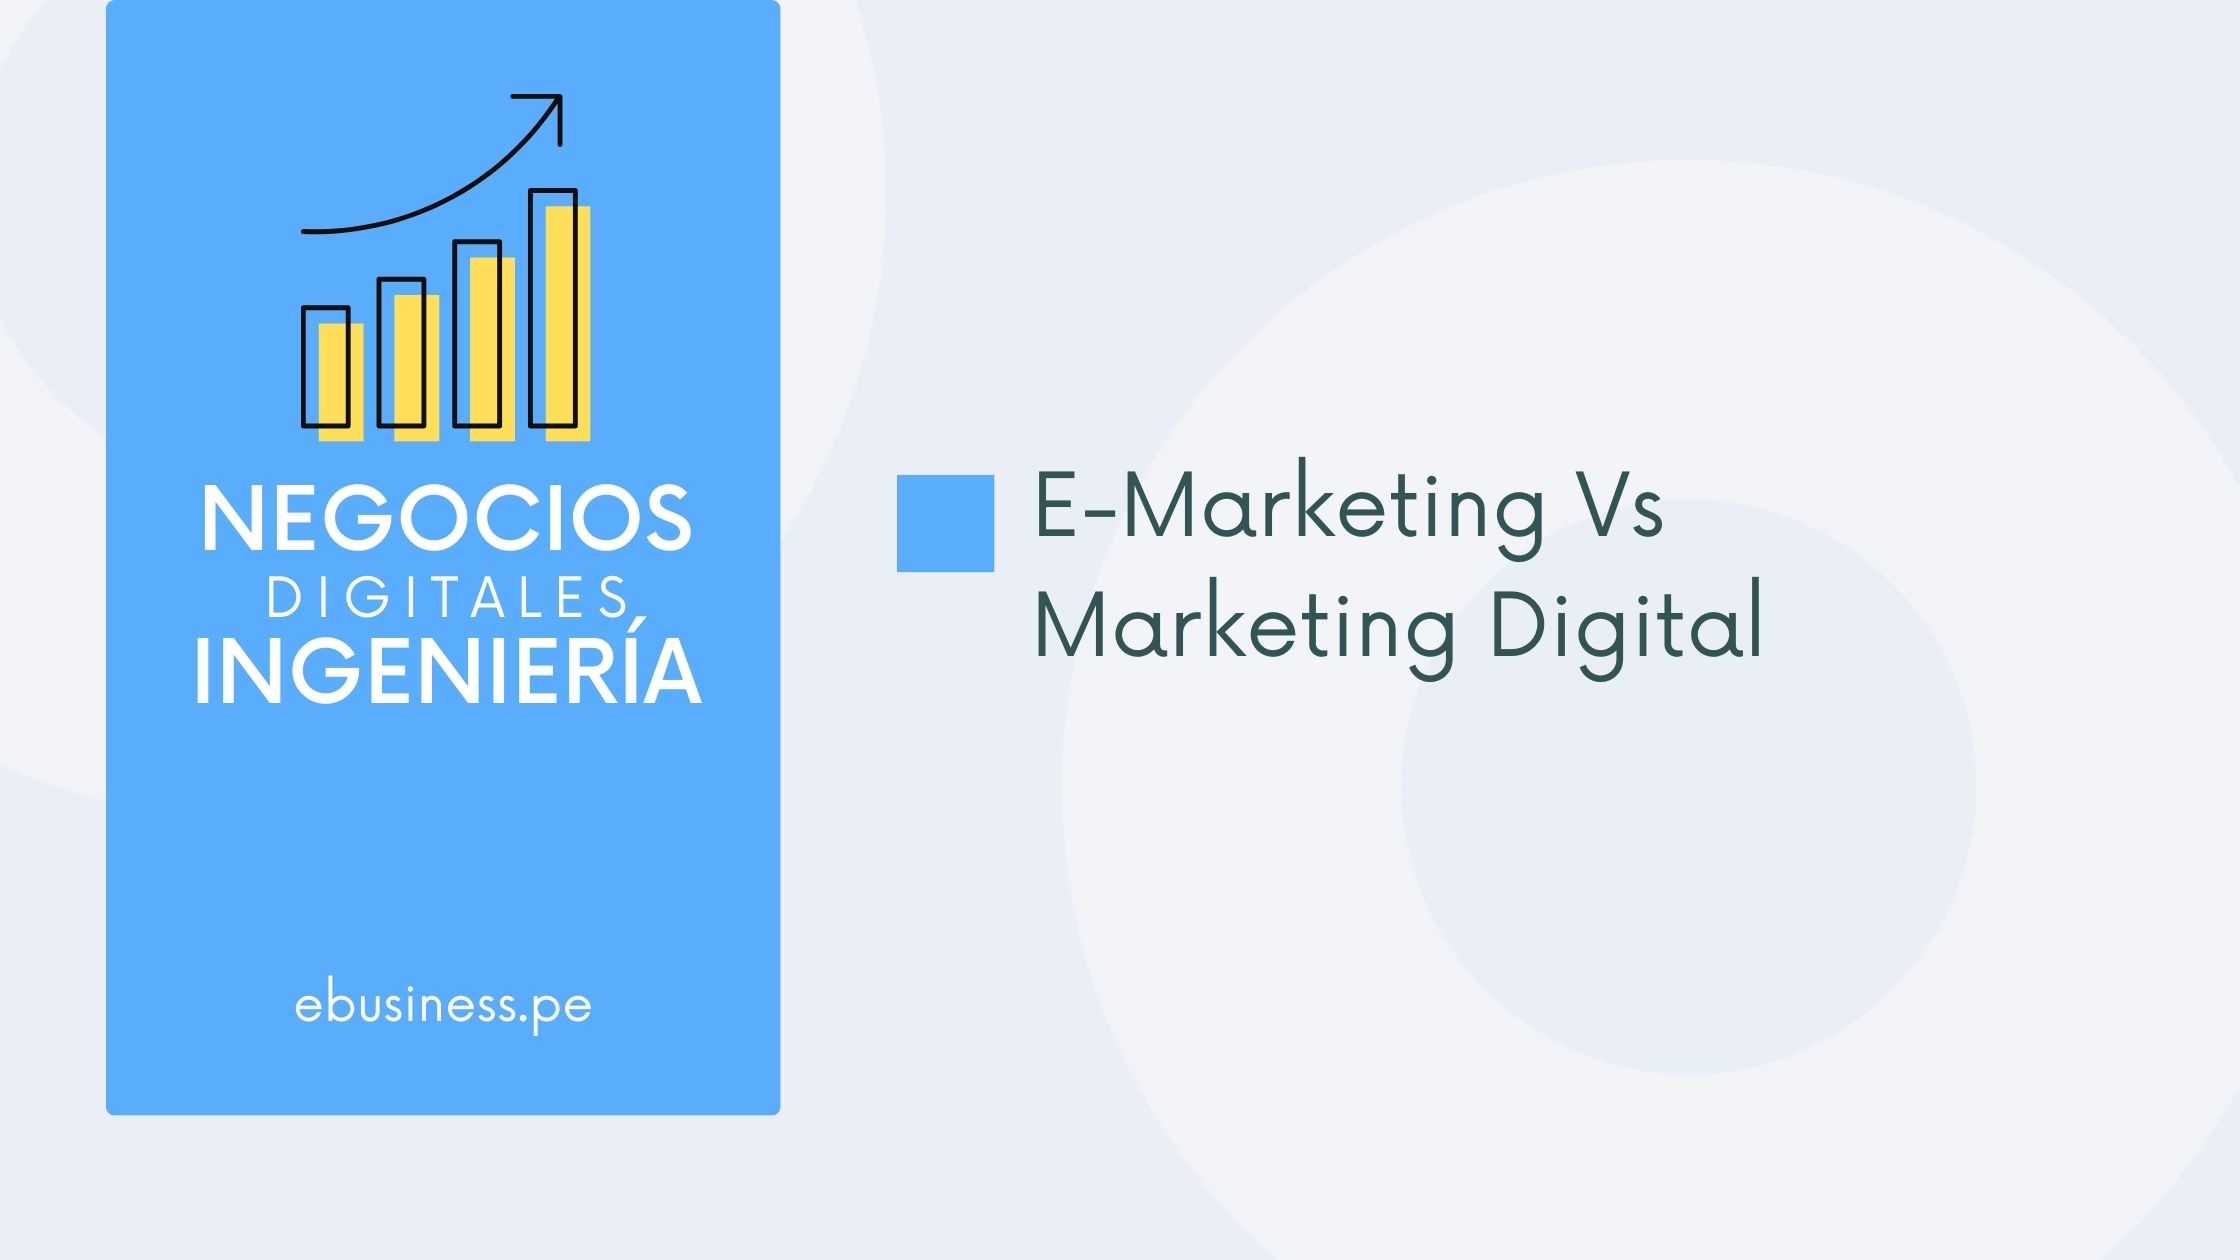 E-Marketing Vs Marketing Digital